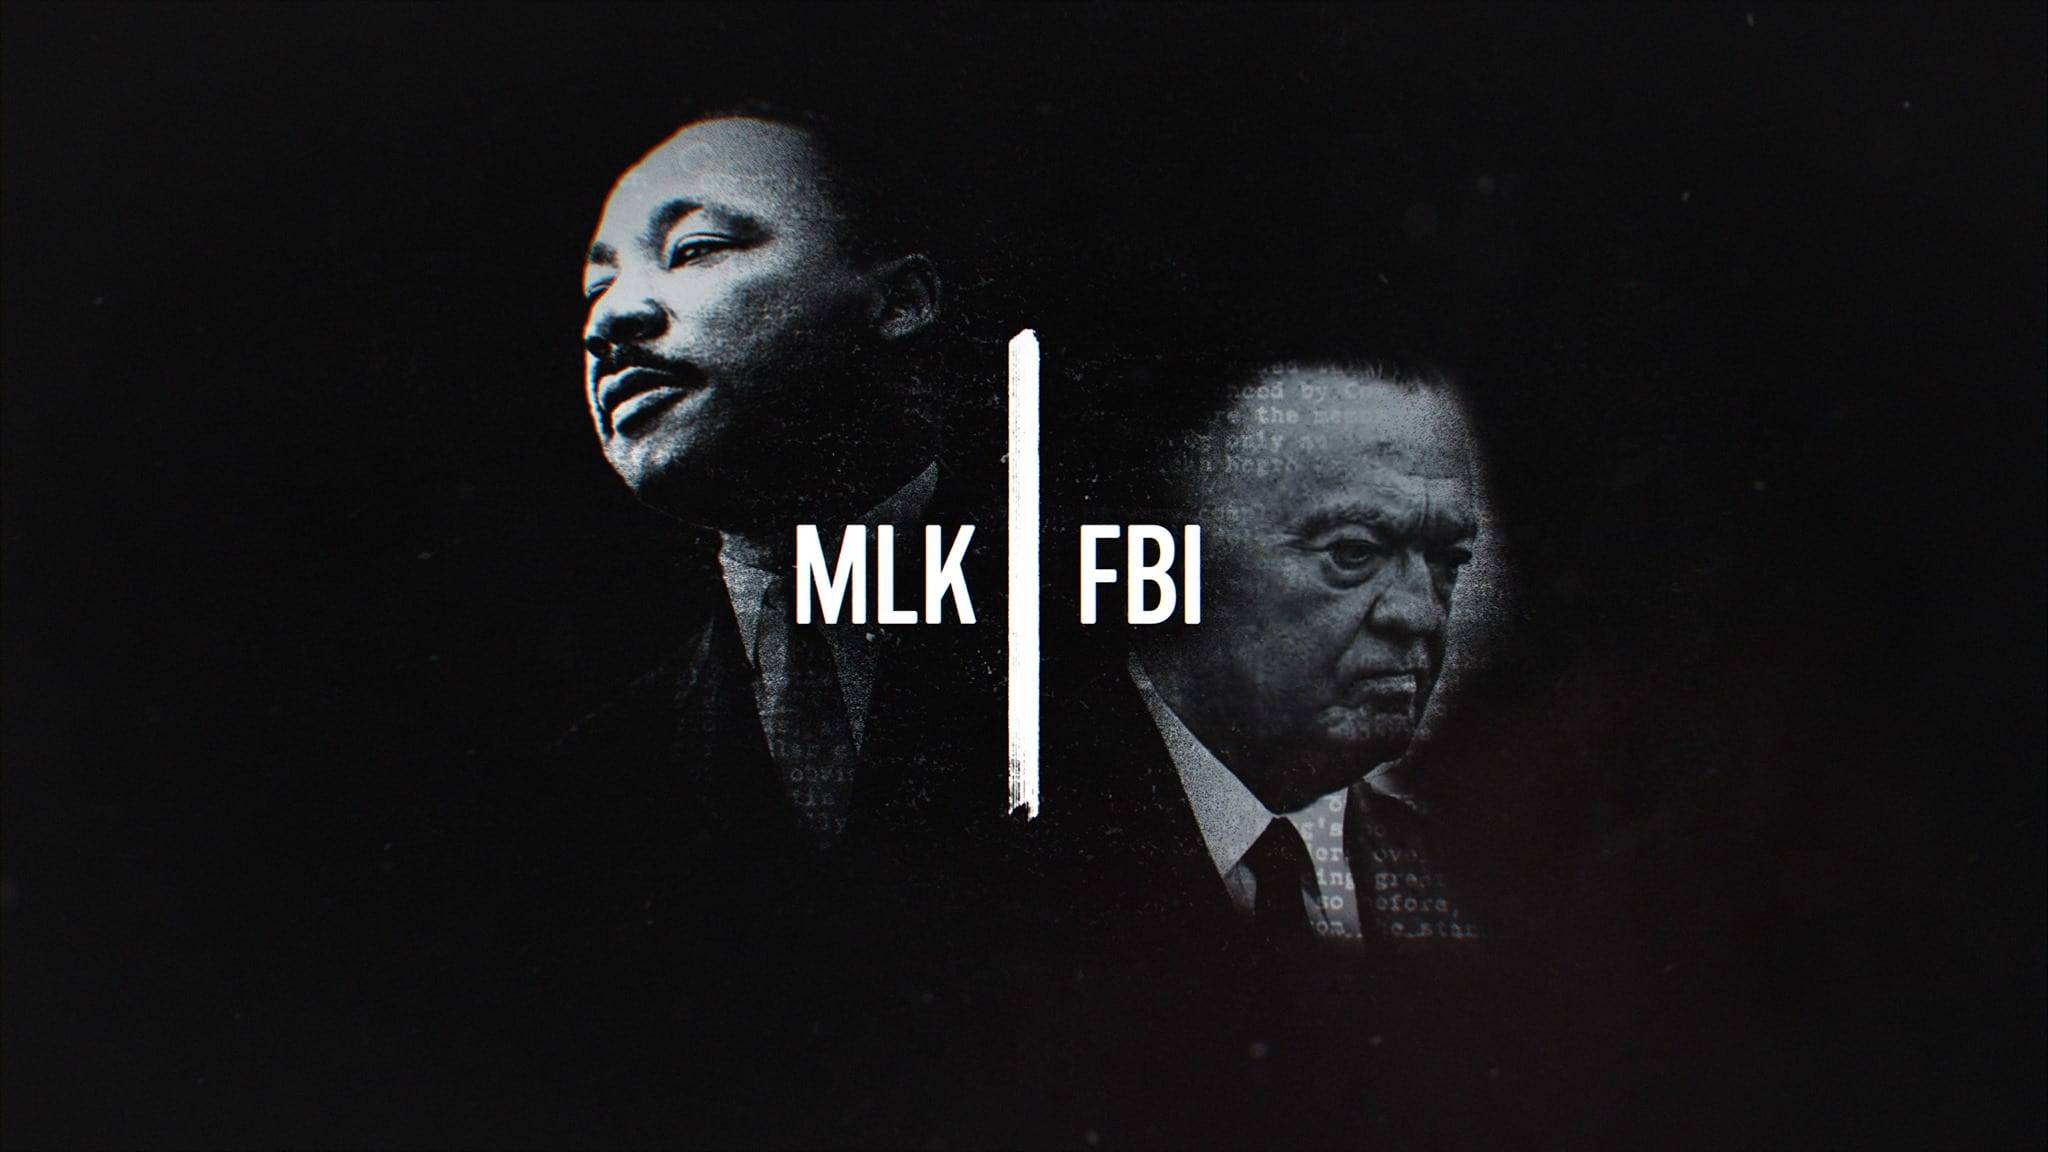 Cubierta de Martin Luther King y el FBI